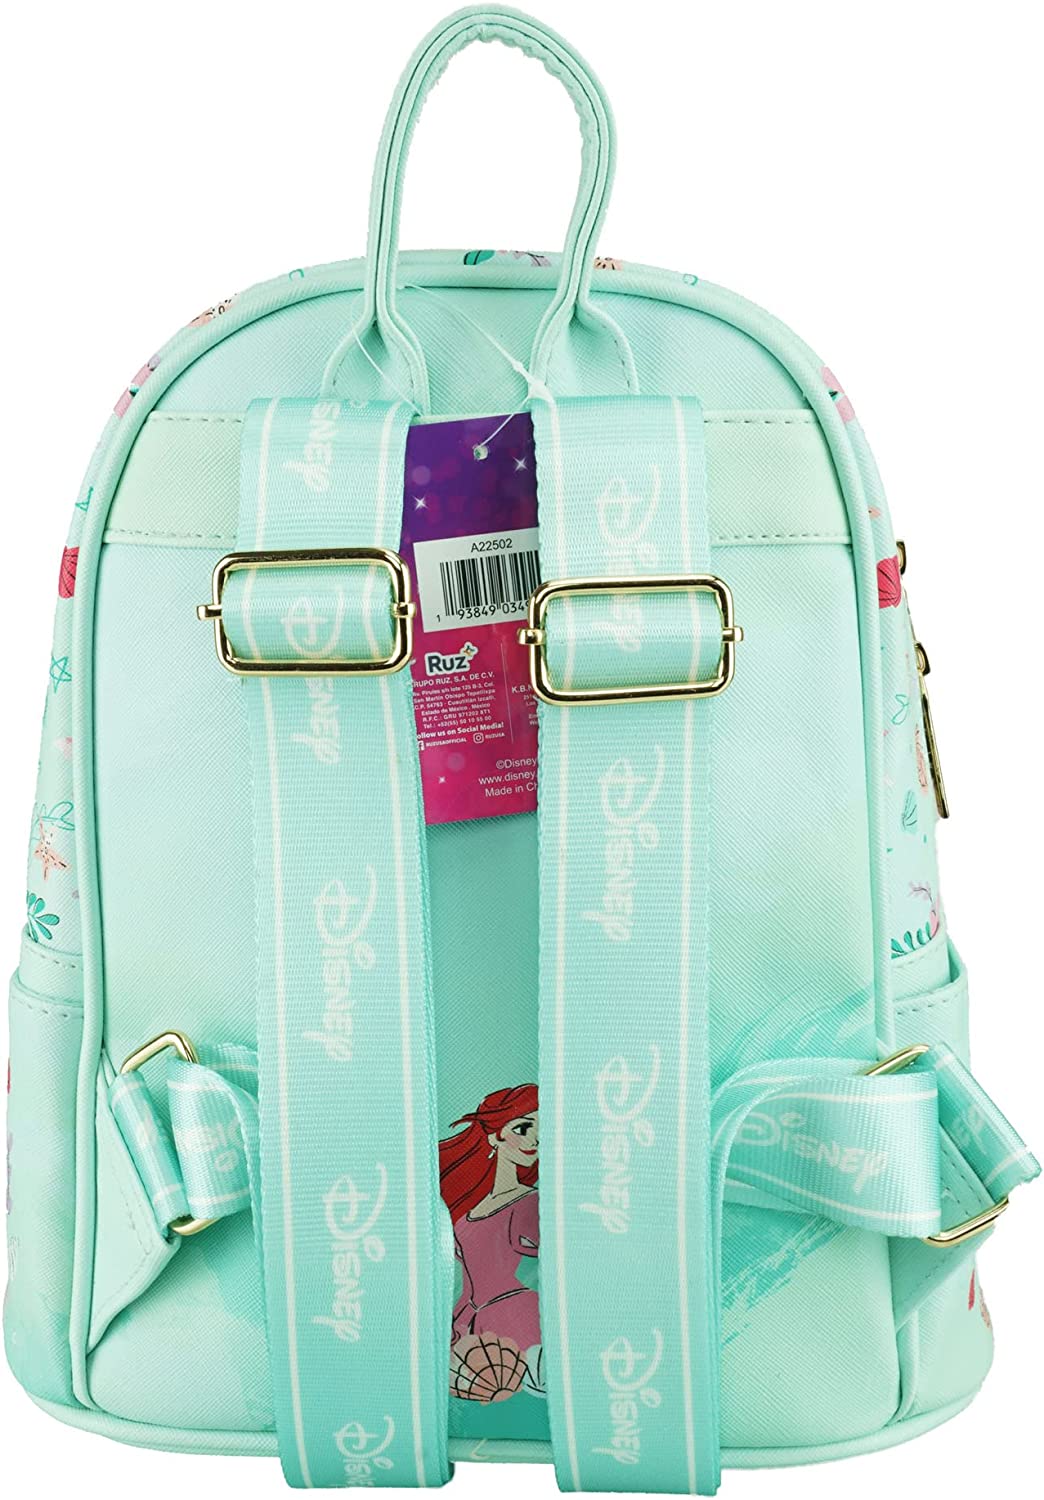 The Little Mermaid - Wondapop 11 Inch Vegan Leather Mini Backpack - A22502